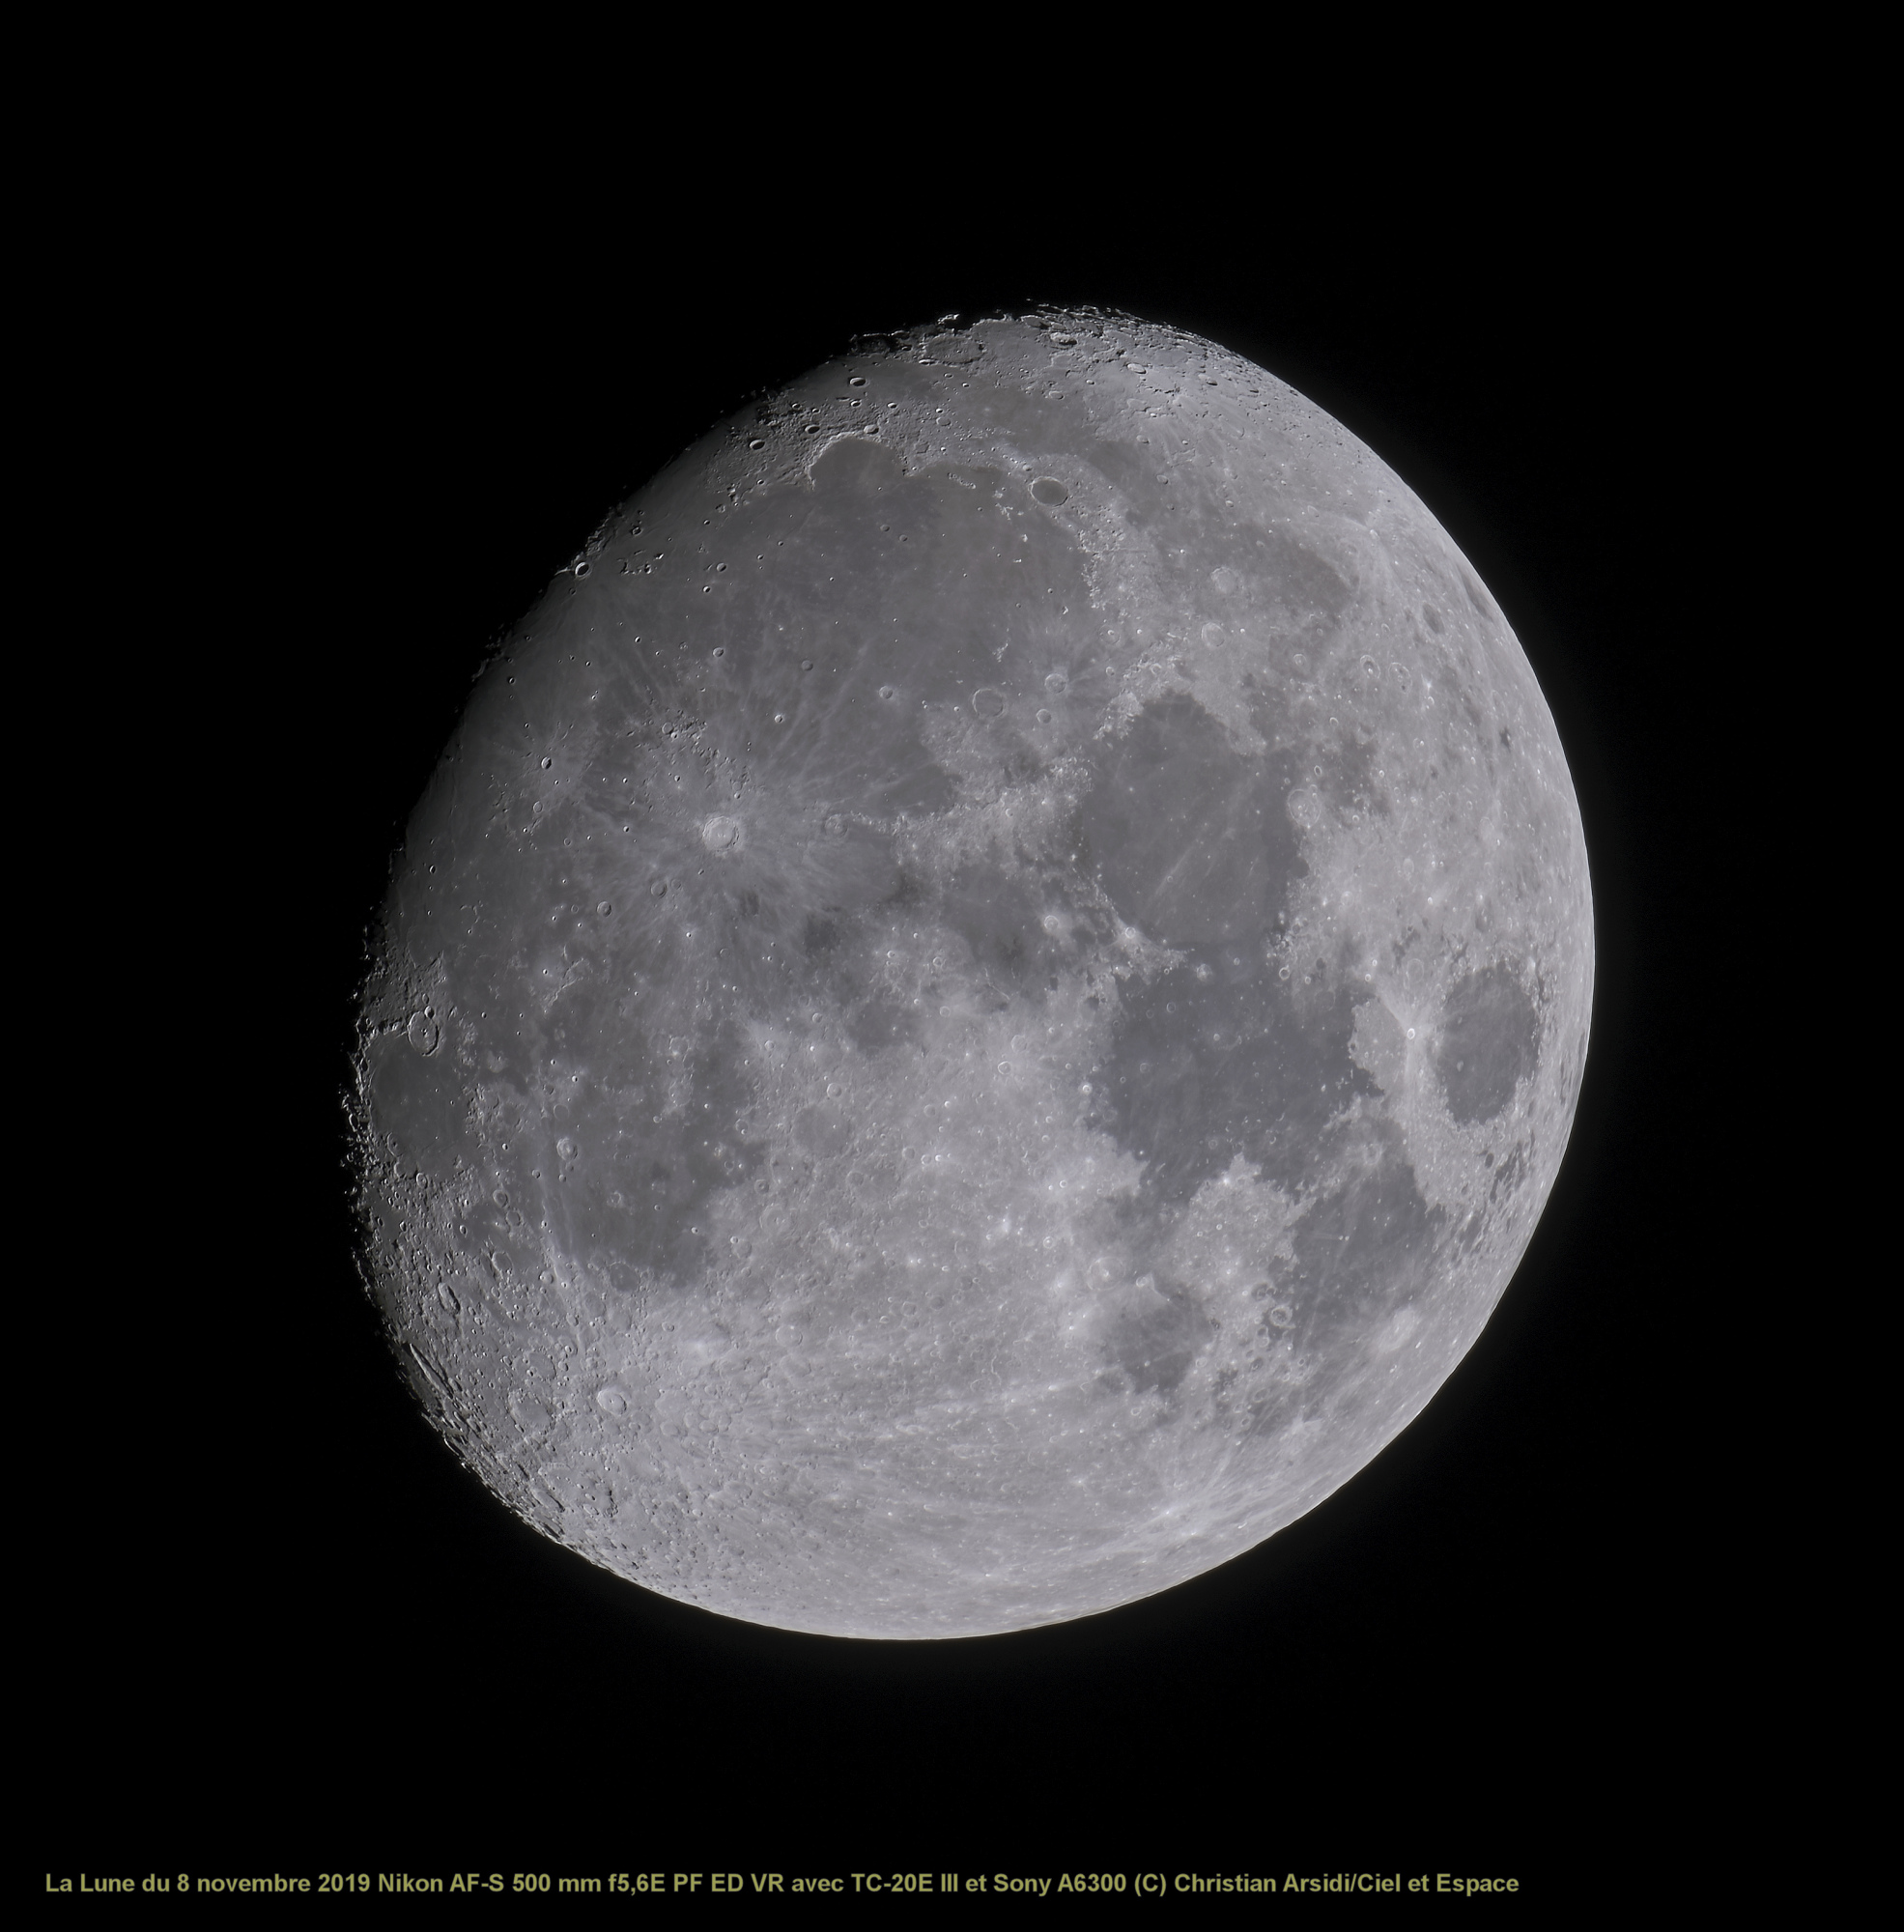 La Lune 35 images V2 traitée_DxO-1 1 BV JPEG TTB.jpg